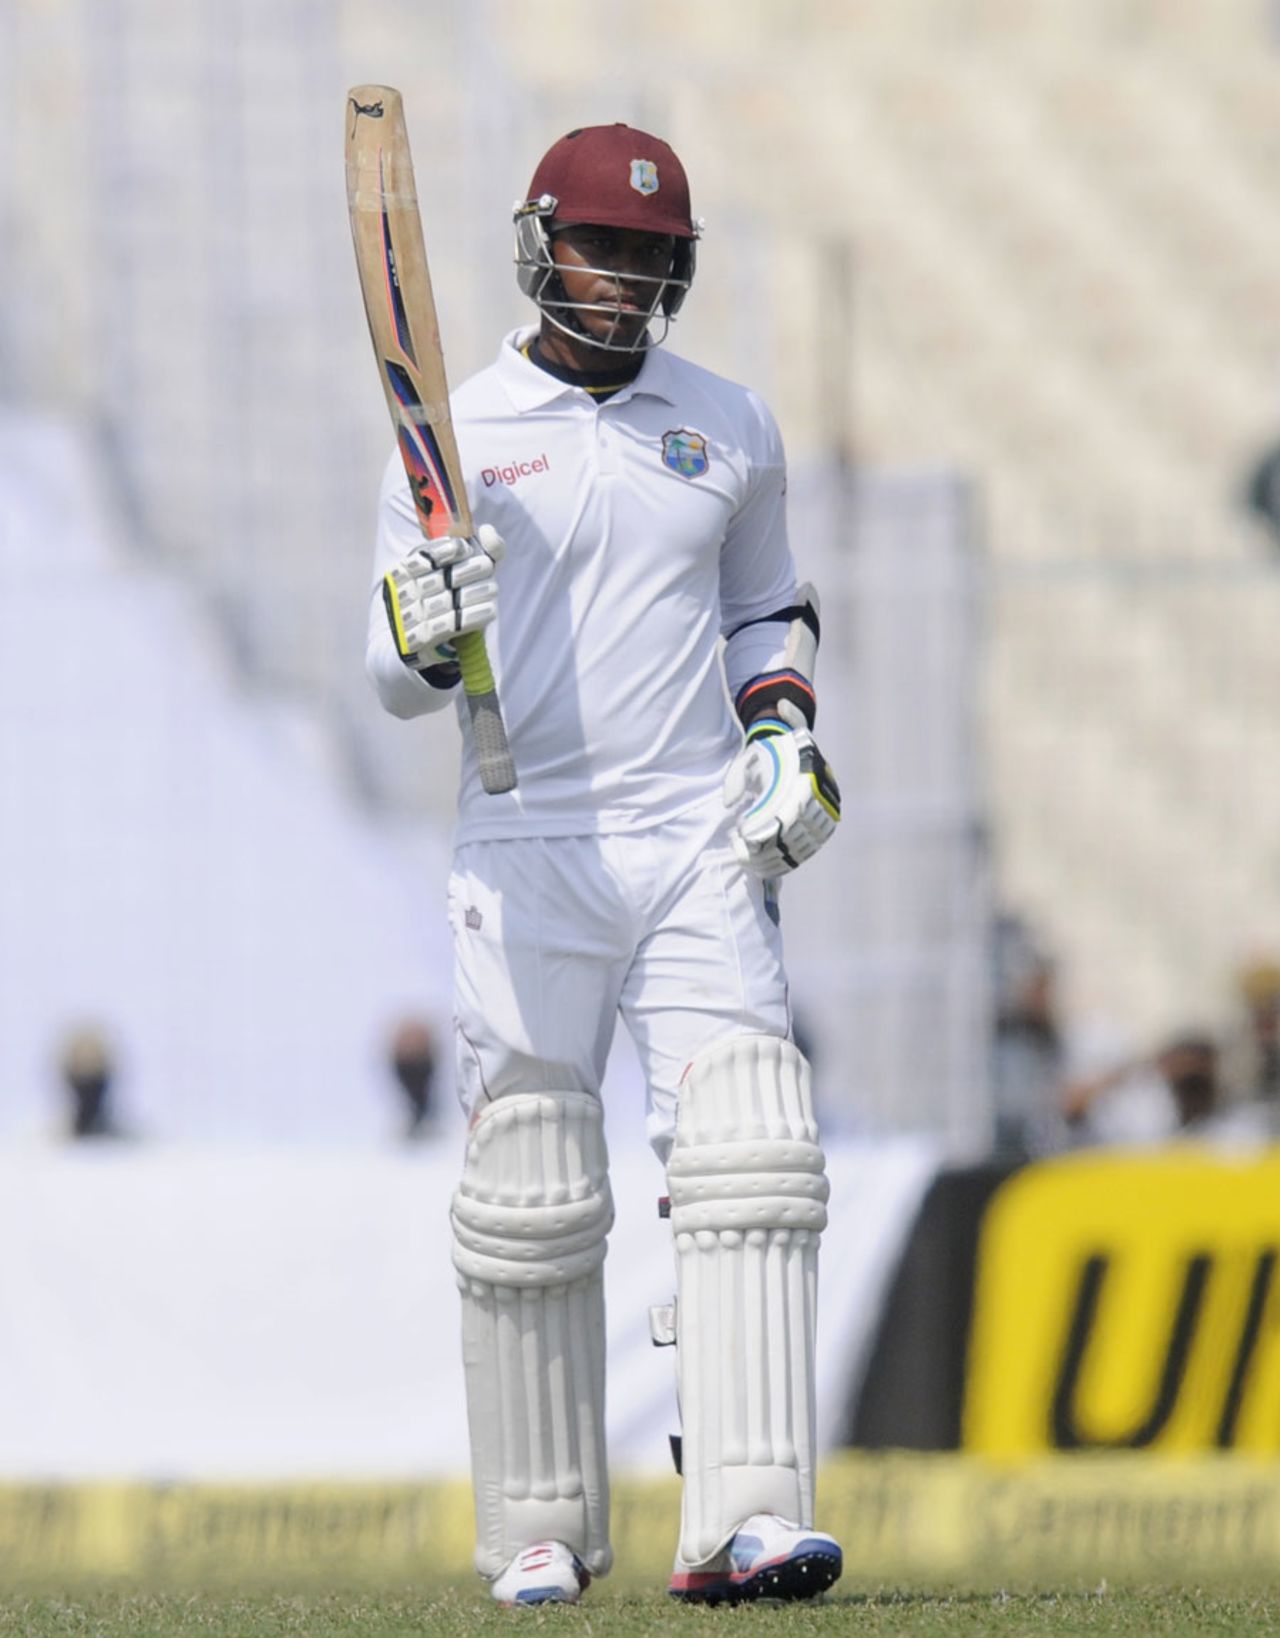 Marlon Samuels raises the bat after reaching his fifty, India v West Indies, 1st Test, Kolkata, 1st day, November 6, 2013